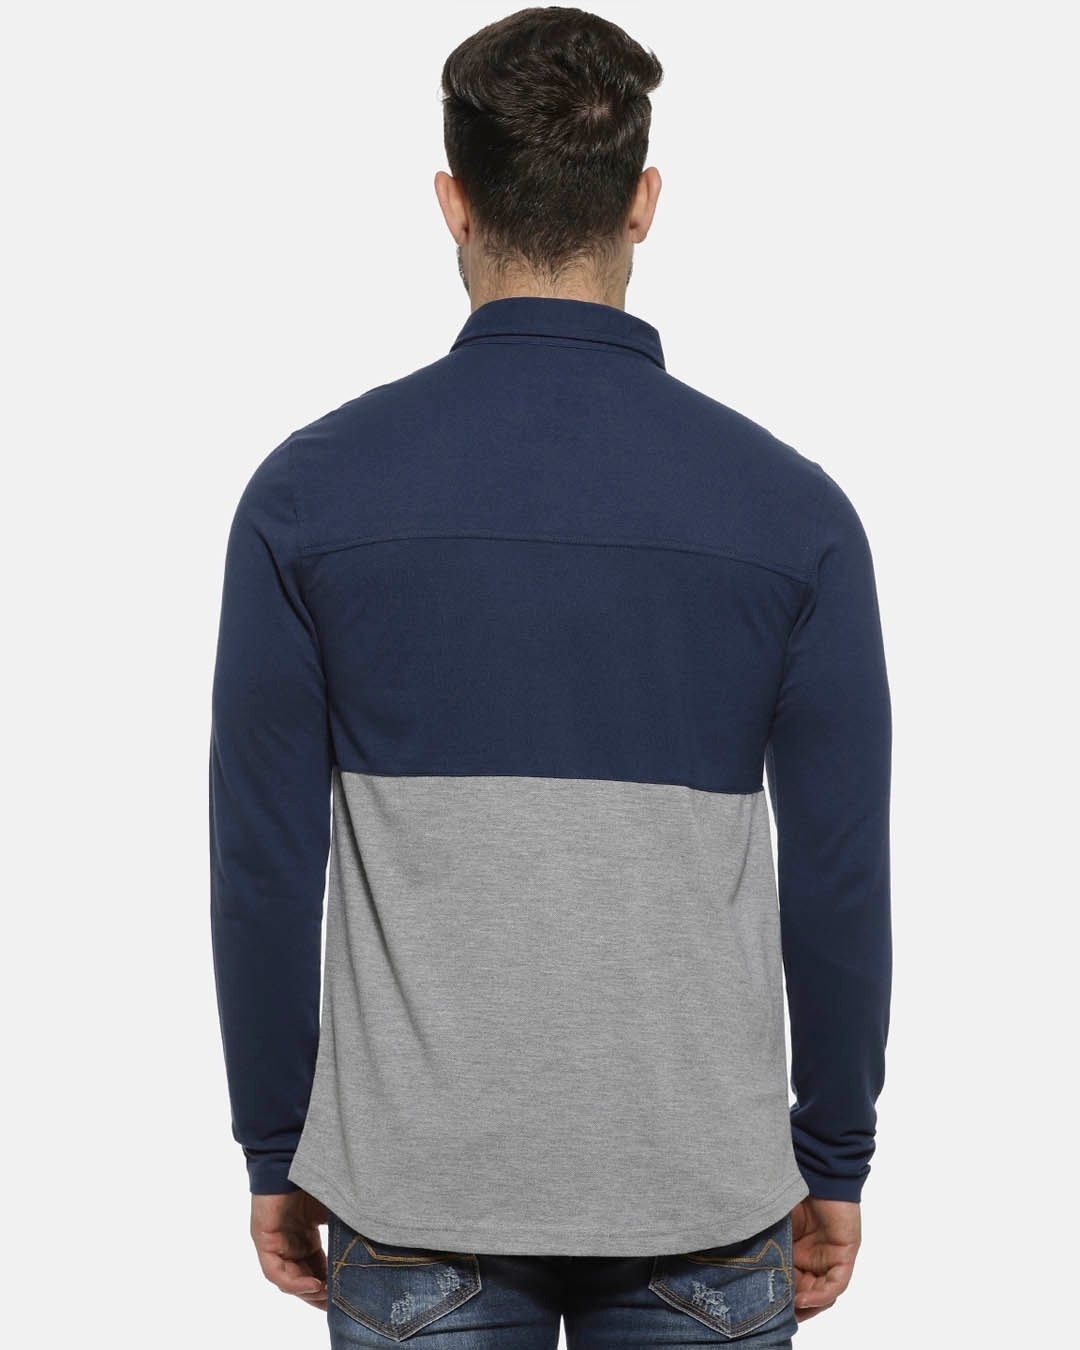 Shop Men'sCasual Shirt-Design